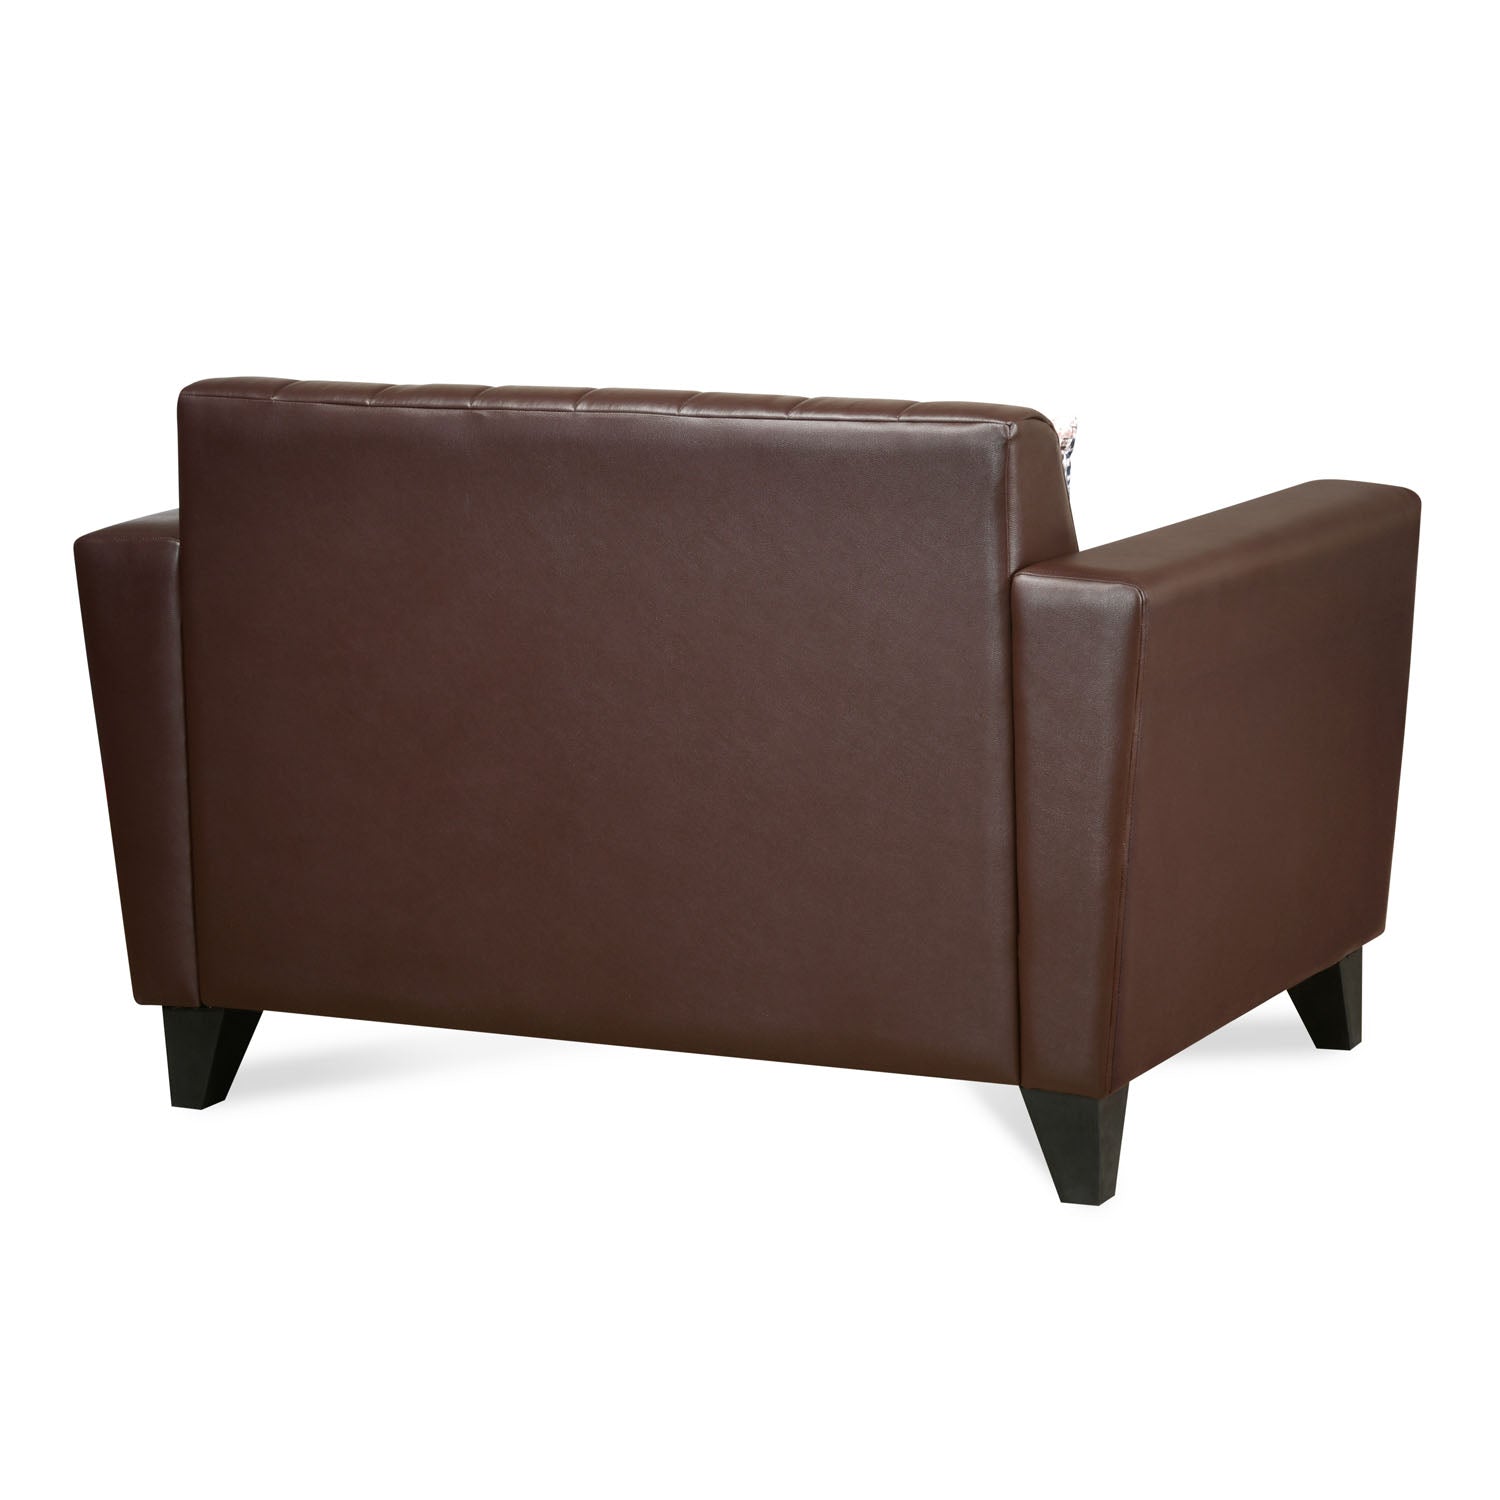 Joy 2 Seater Sofa (Brown)